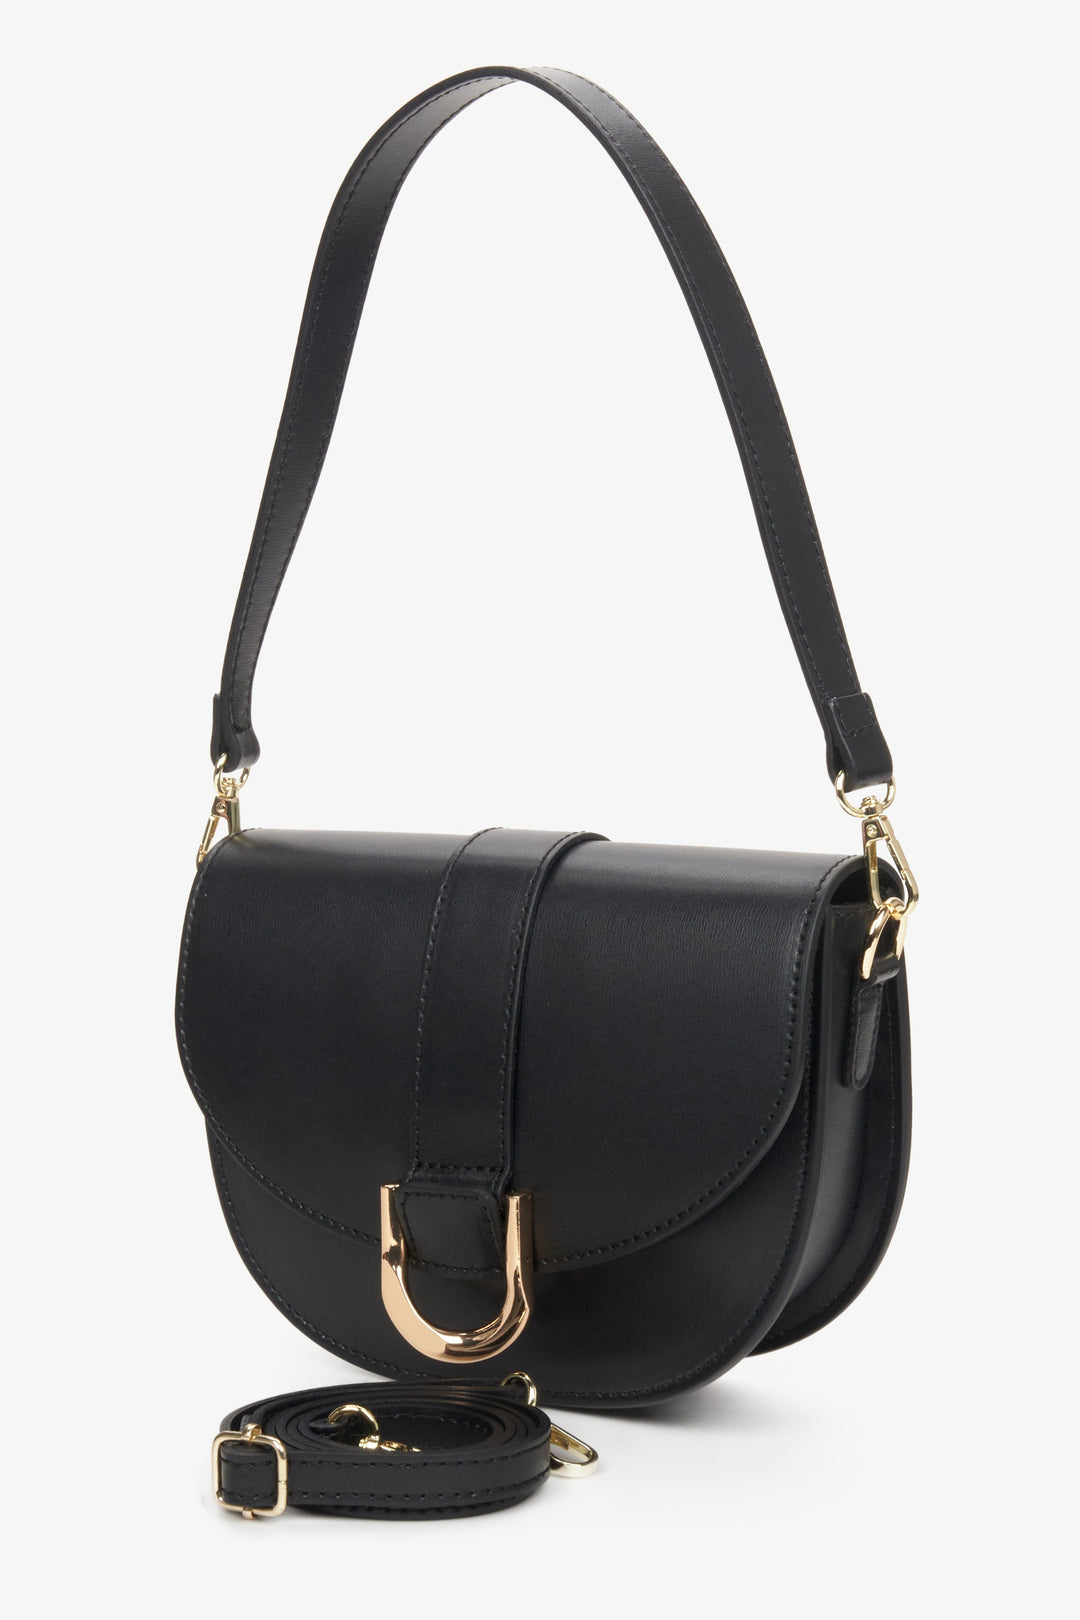 Women's black leather handbag with golden hardware Estro.